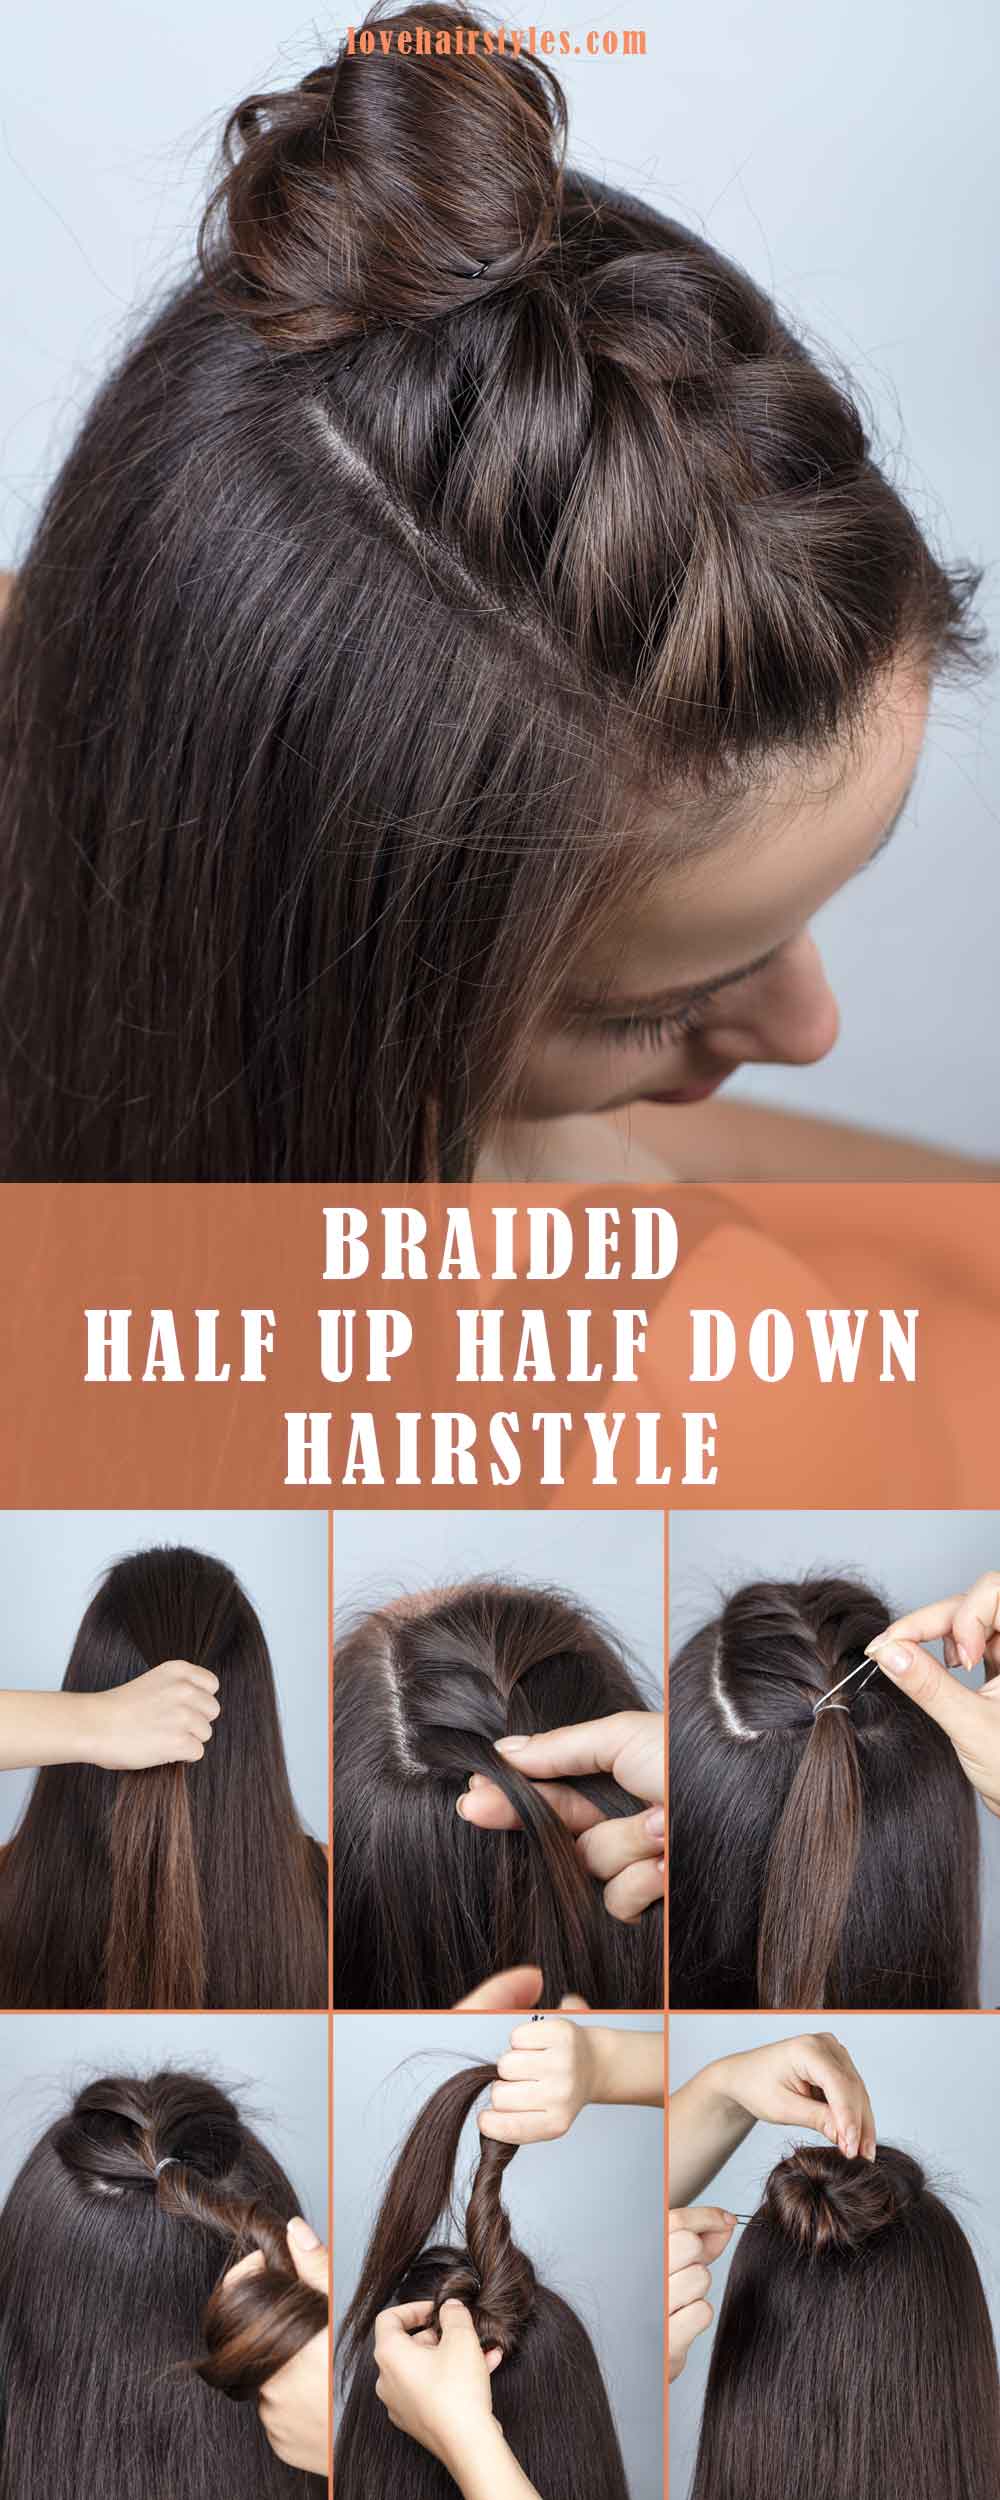 Easy Hair Style Ideas For High School Girls - Short, Medium And Long Length  Hairstyles